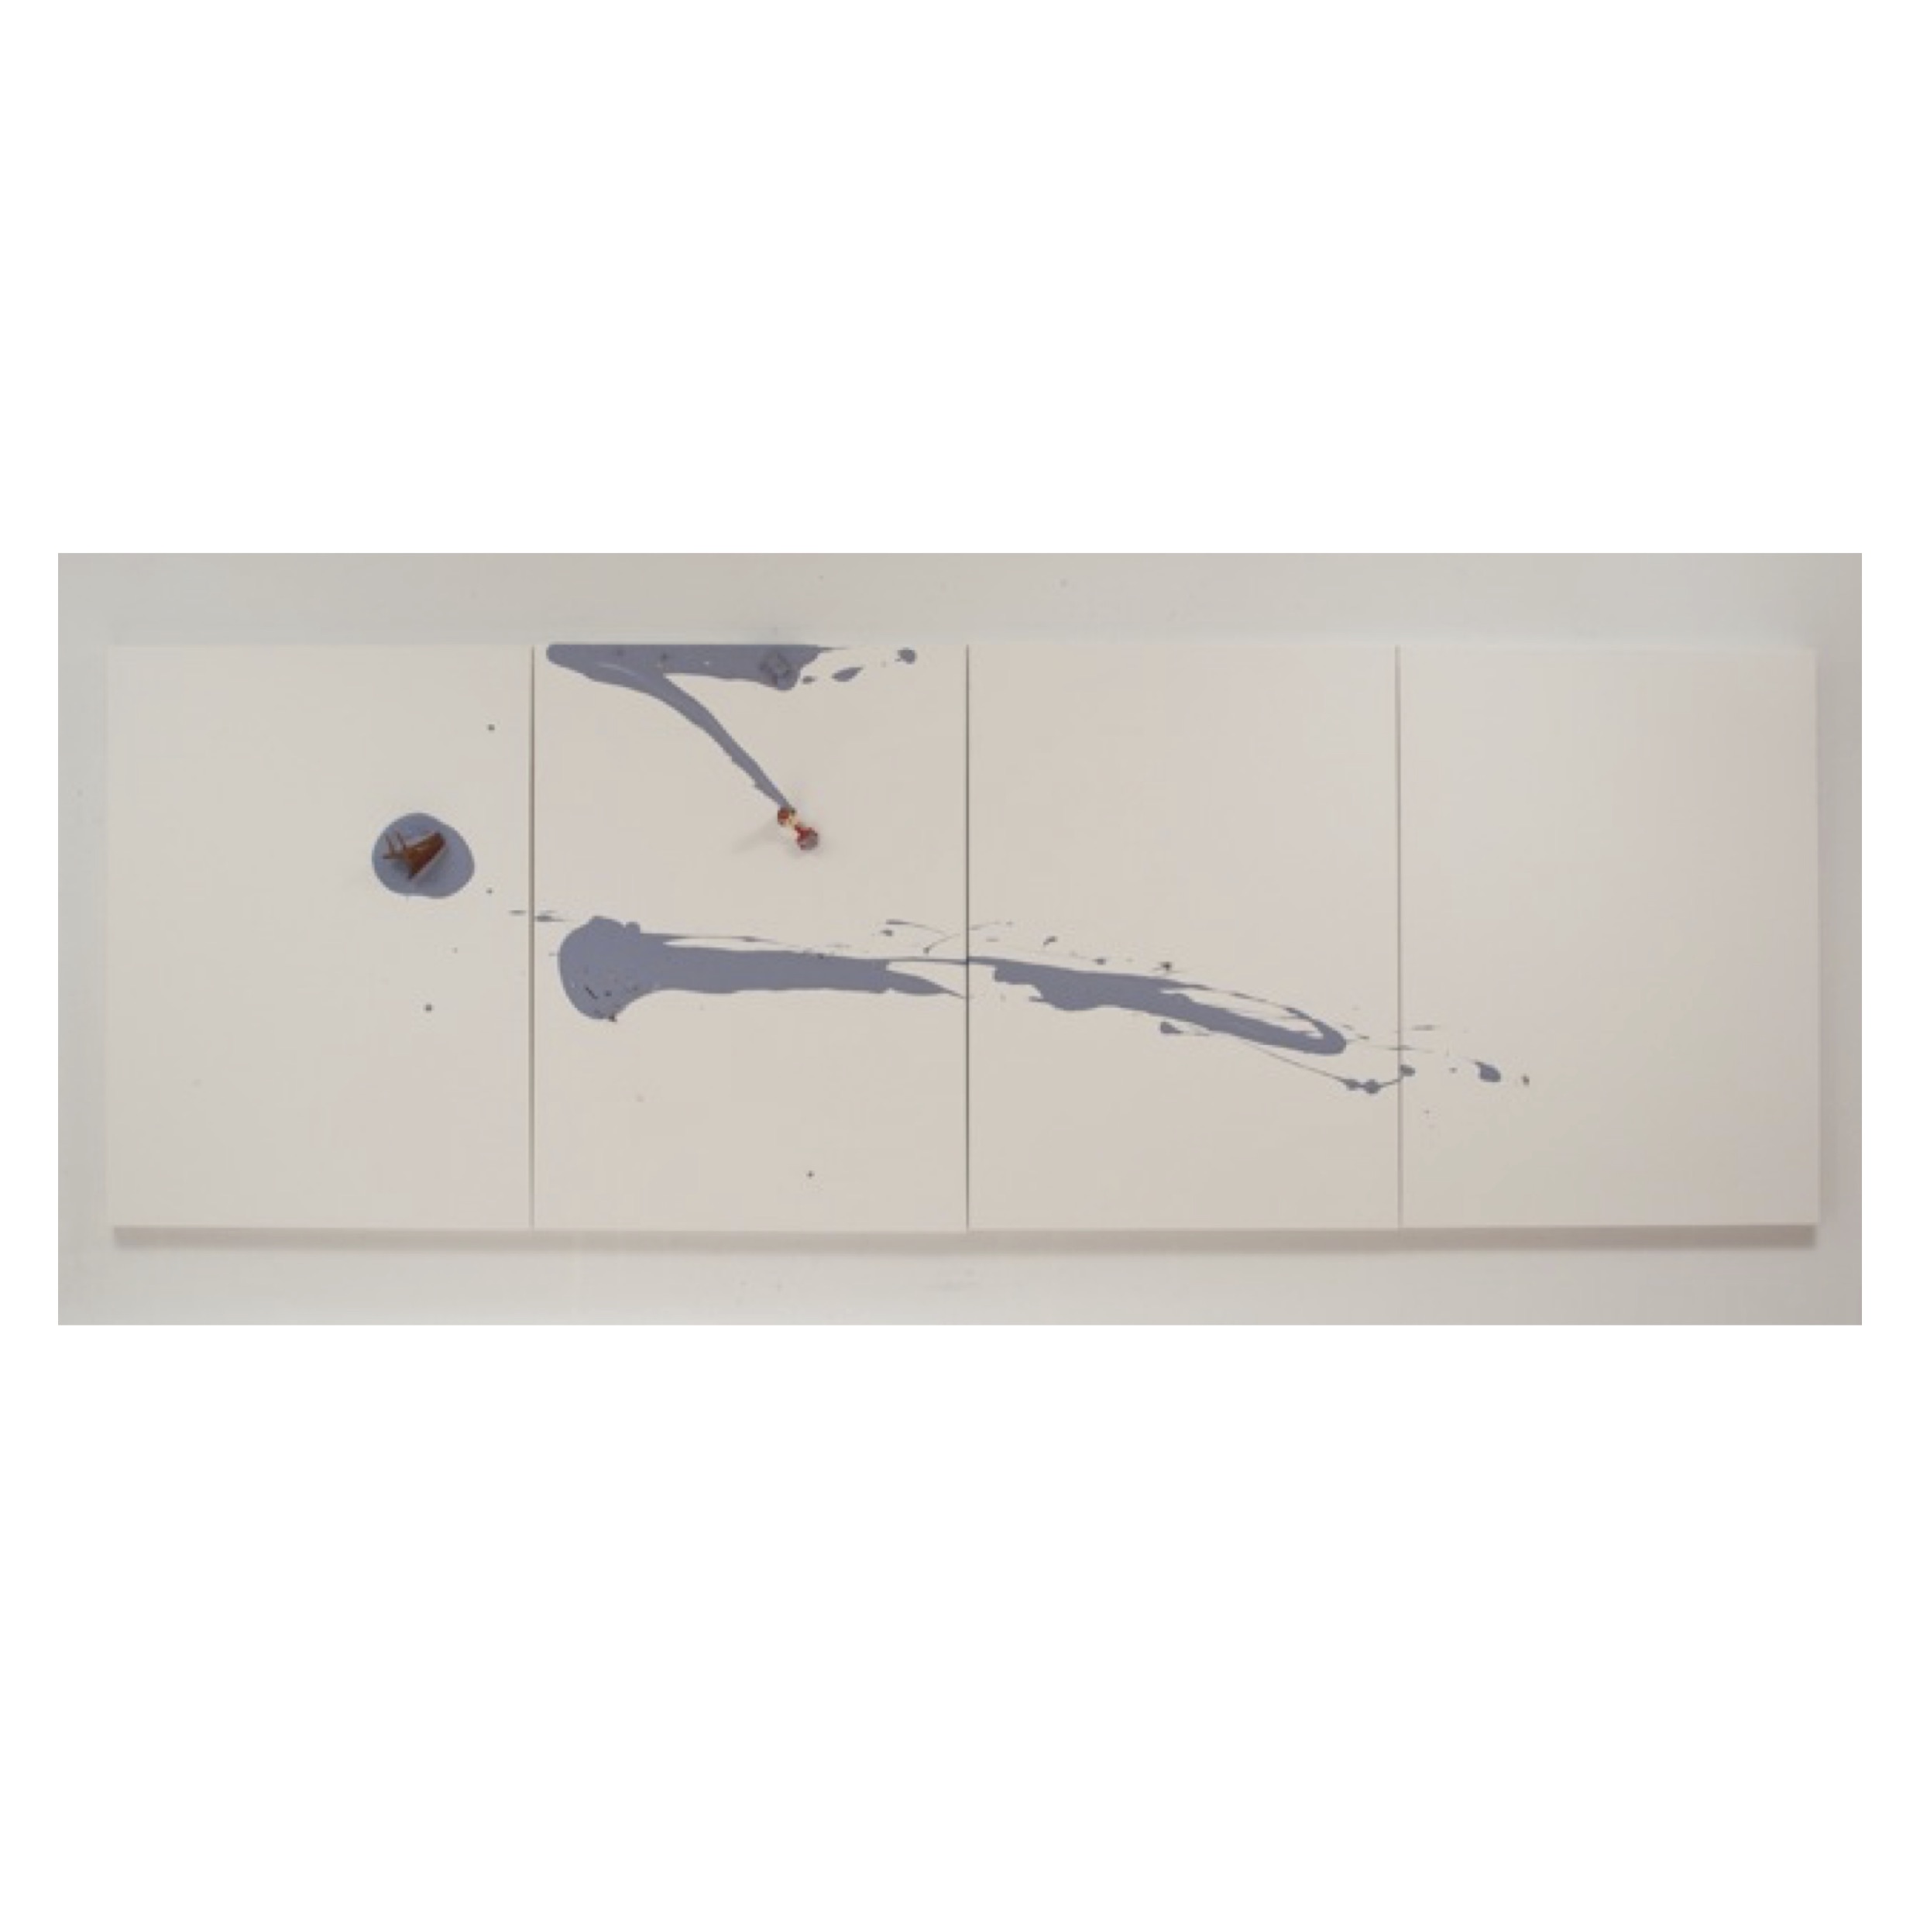 Liliana Porter - Fallen Piano and Other Situations. 2015. Acrilico y ensamblaje sobre lienzo. 101,6 x 304,8 cm